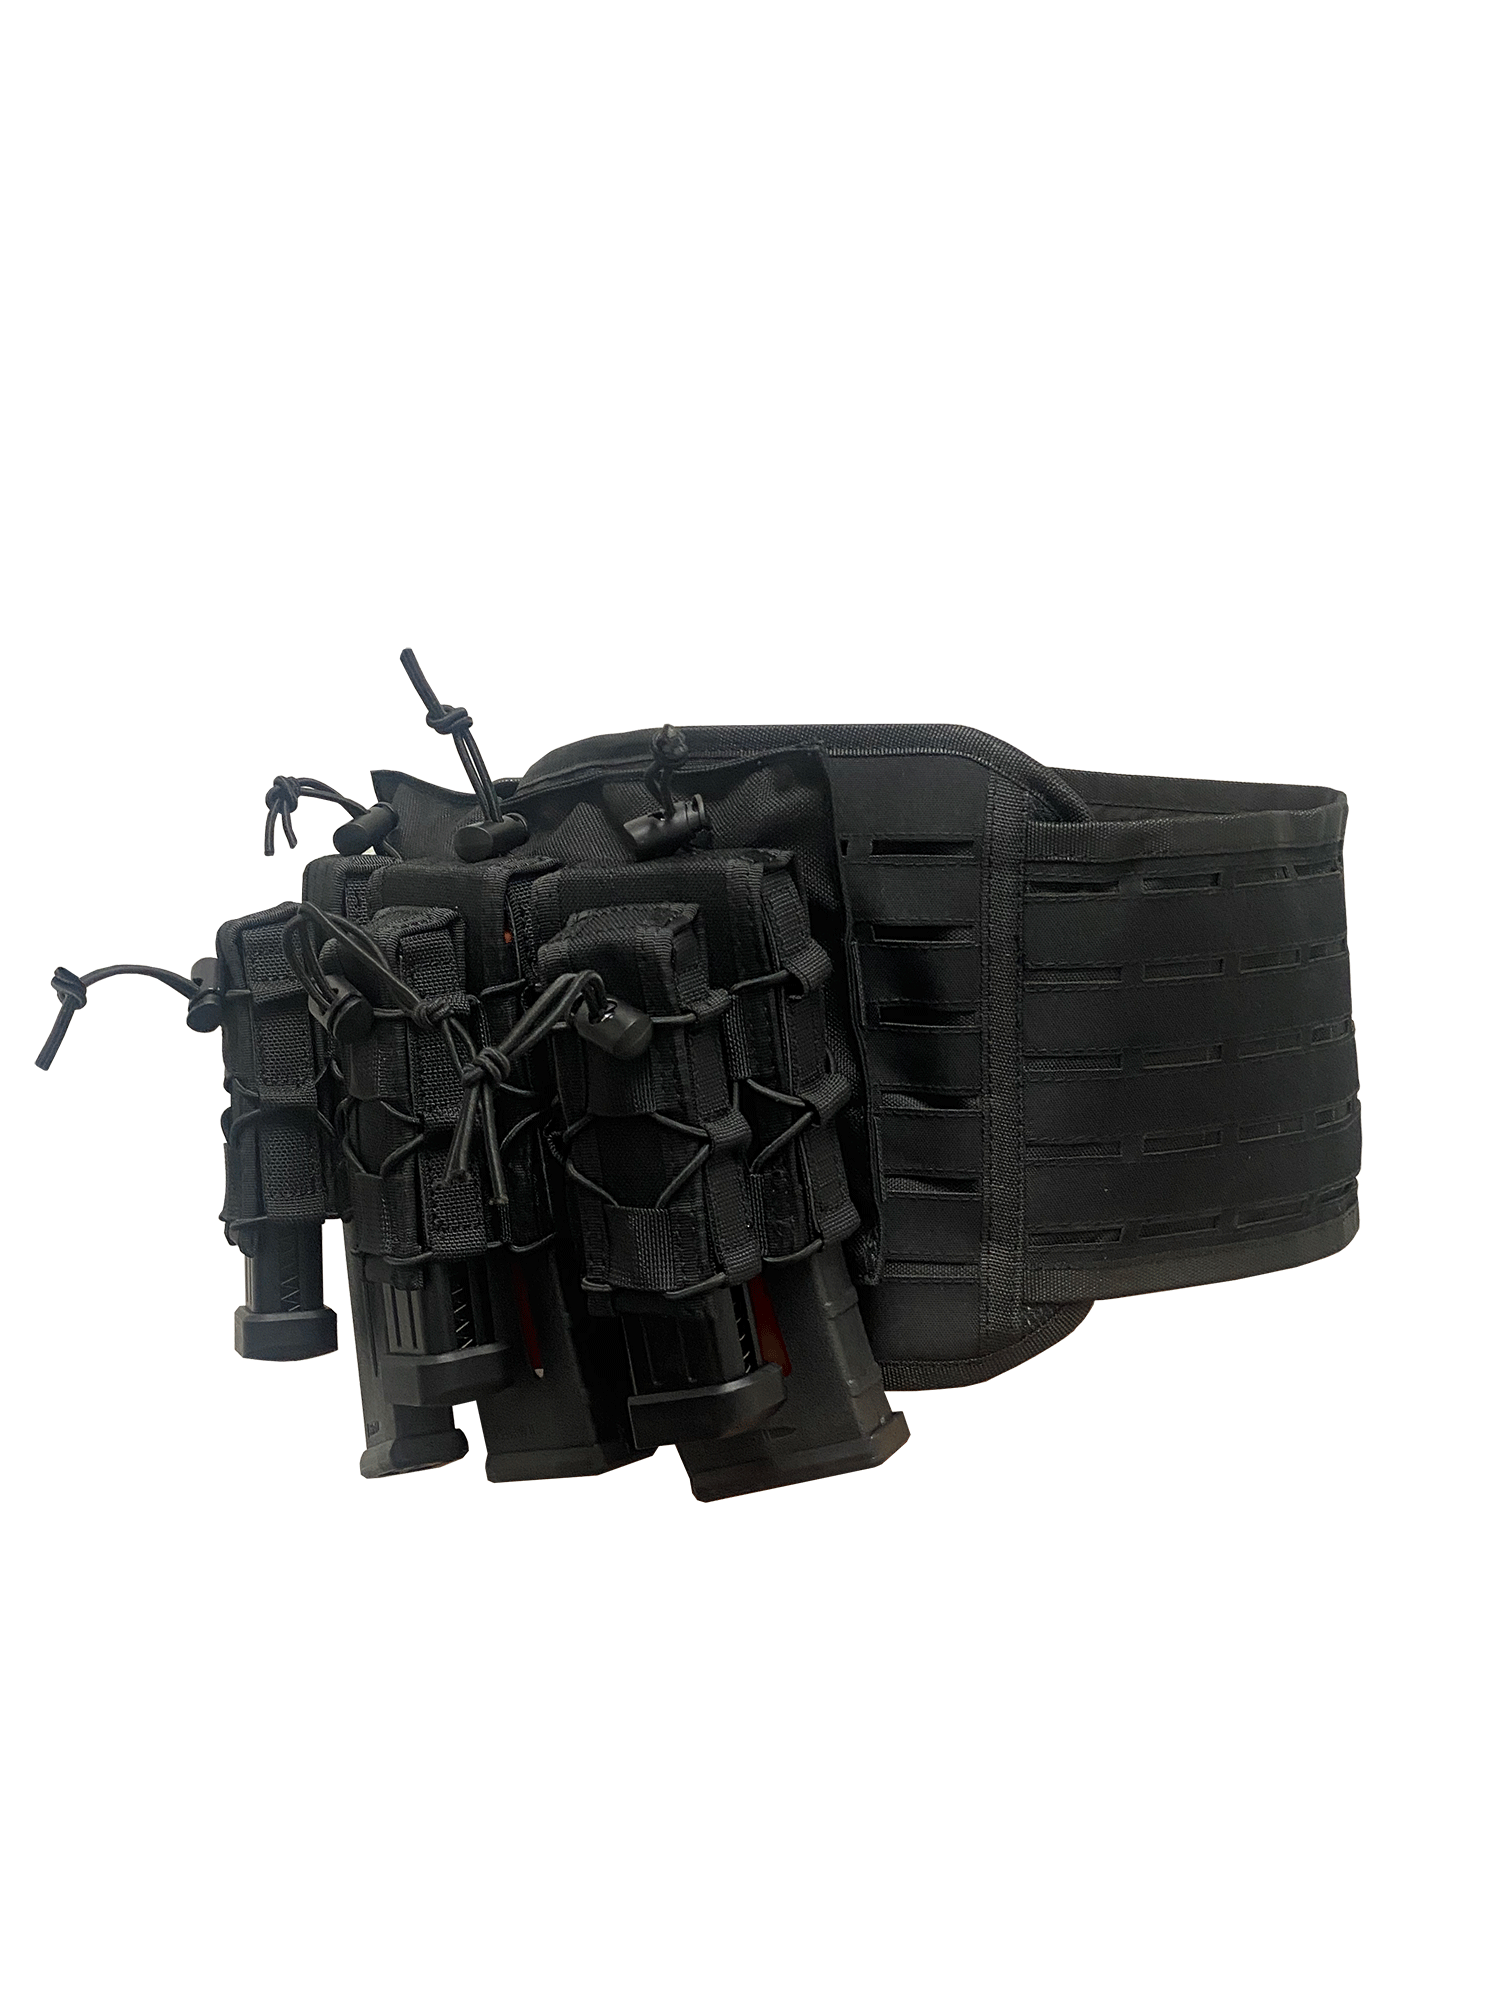 Gunfighter Airsoft Tac Pack - Dark Camo